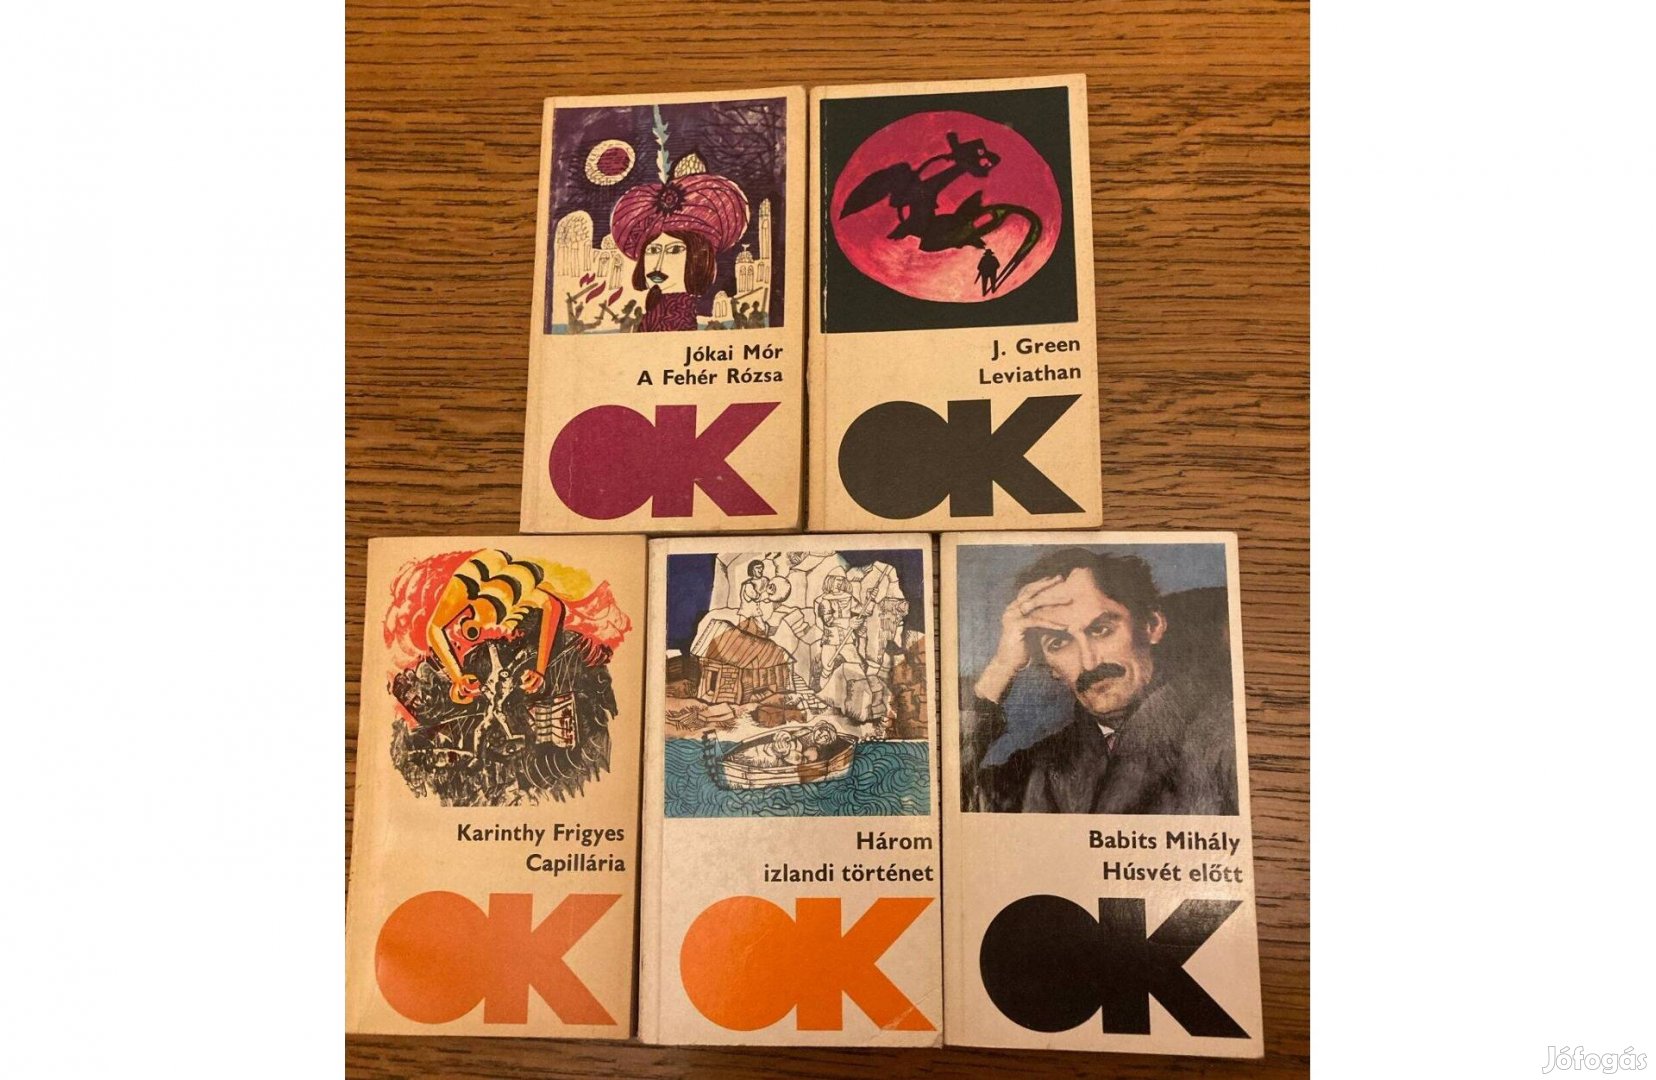 OK sorozat könyvei